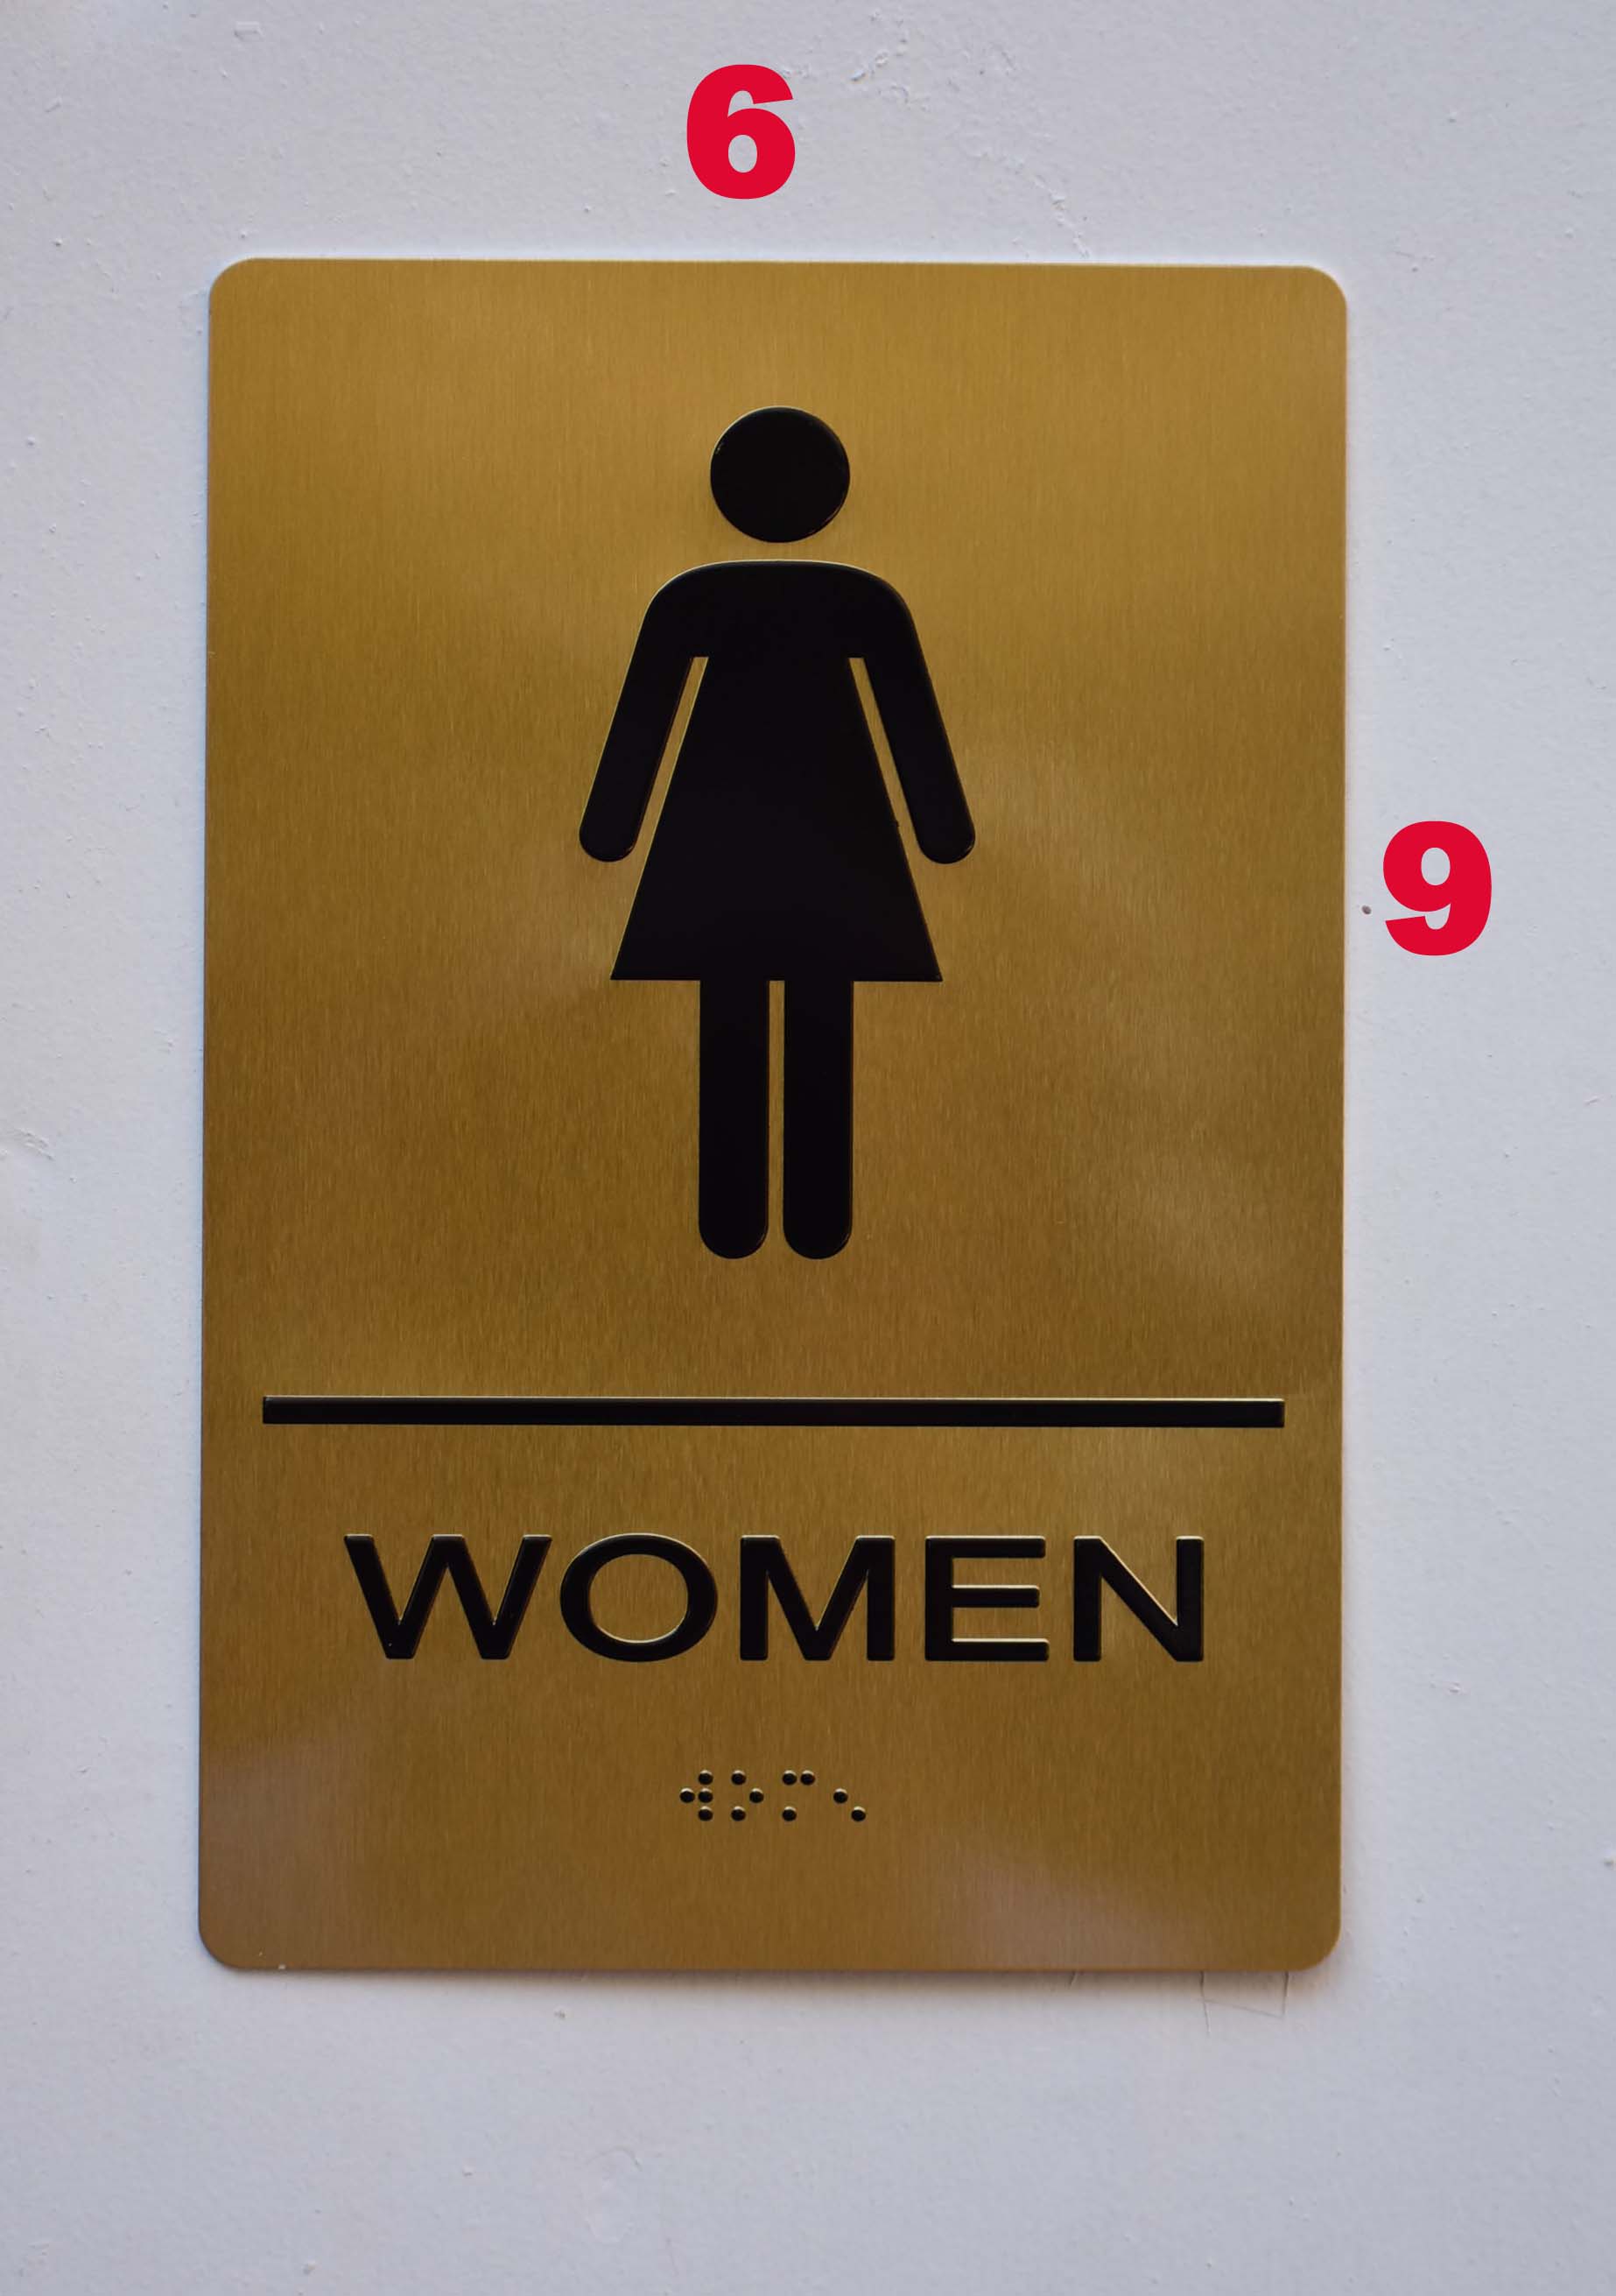 ADA restroom signs